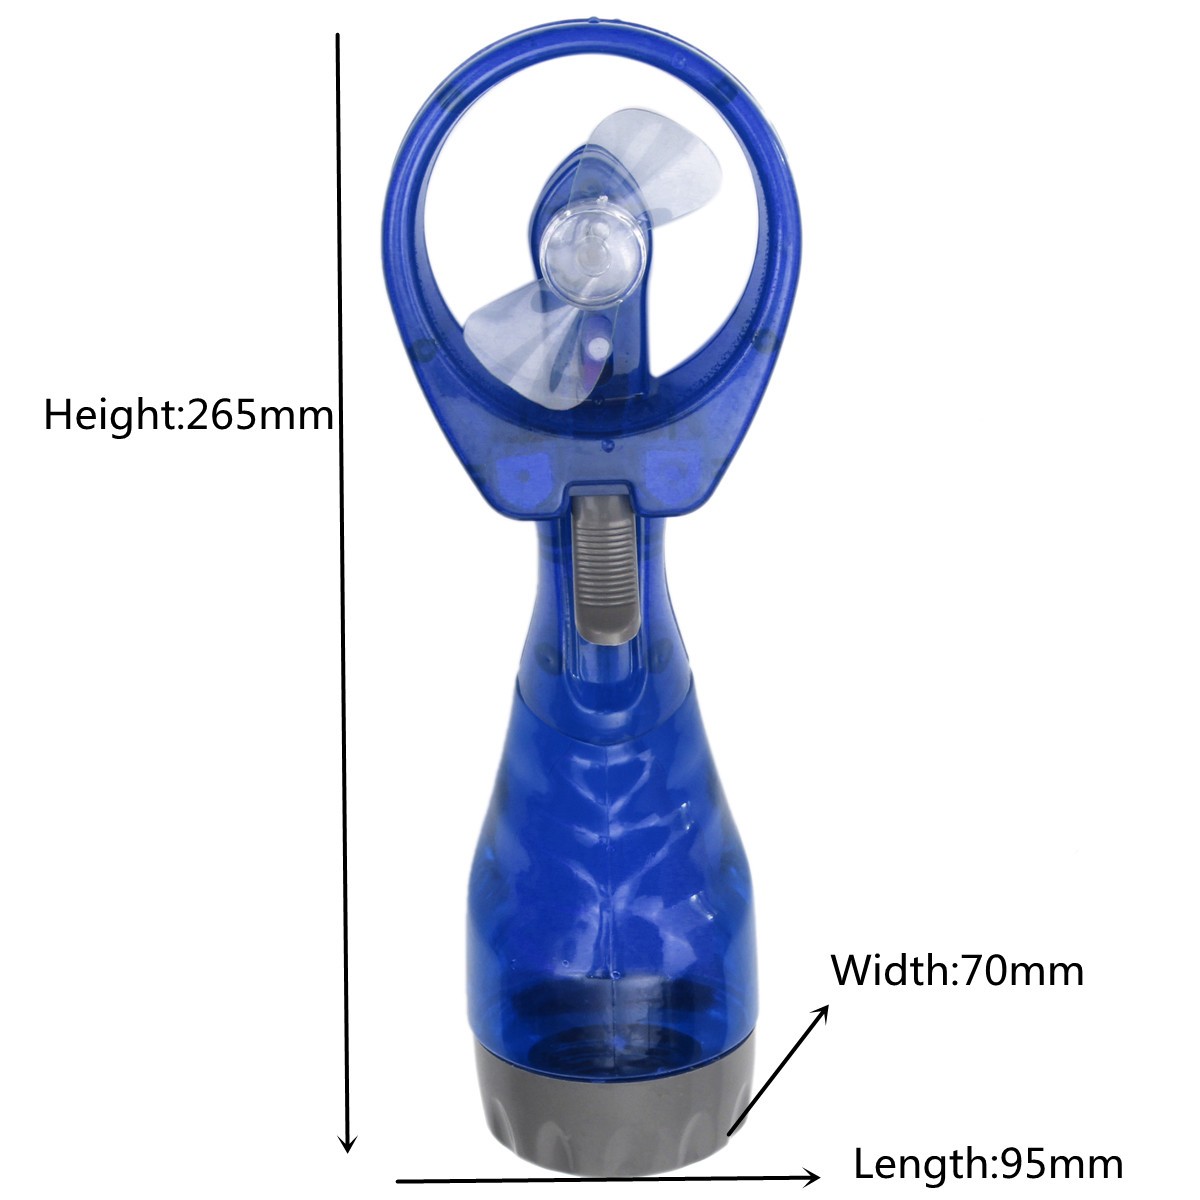 Portable-Mini-Hand-Held-Spray-Cooling-Fan-Water-Mist-Sport-Beach-Travel-Gadget-1319758-8